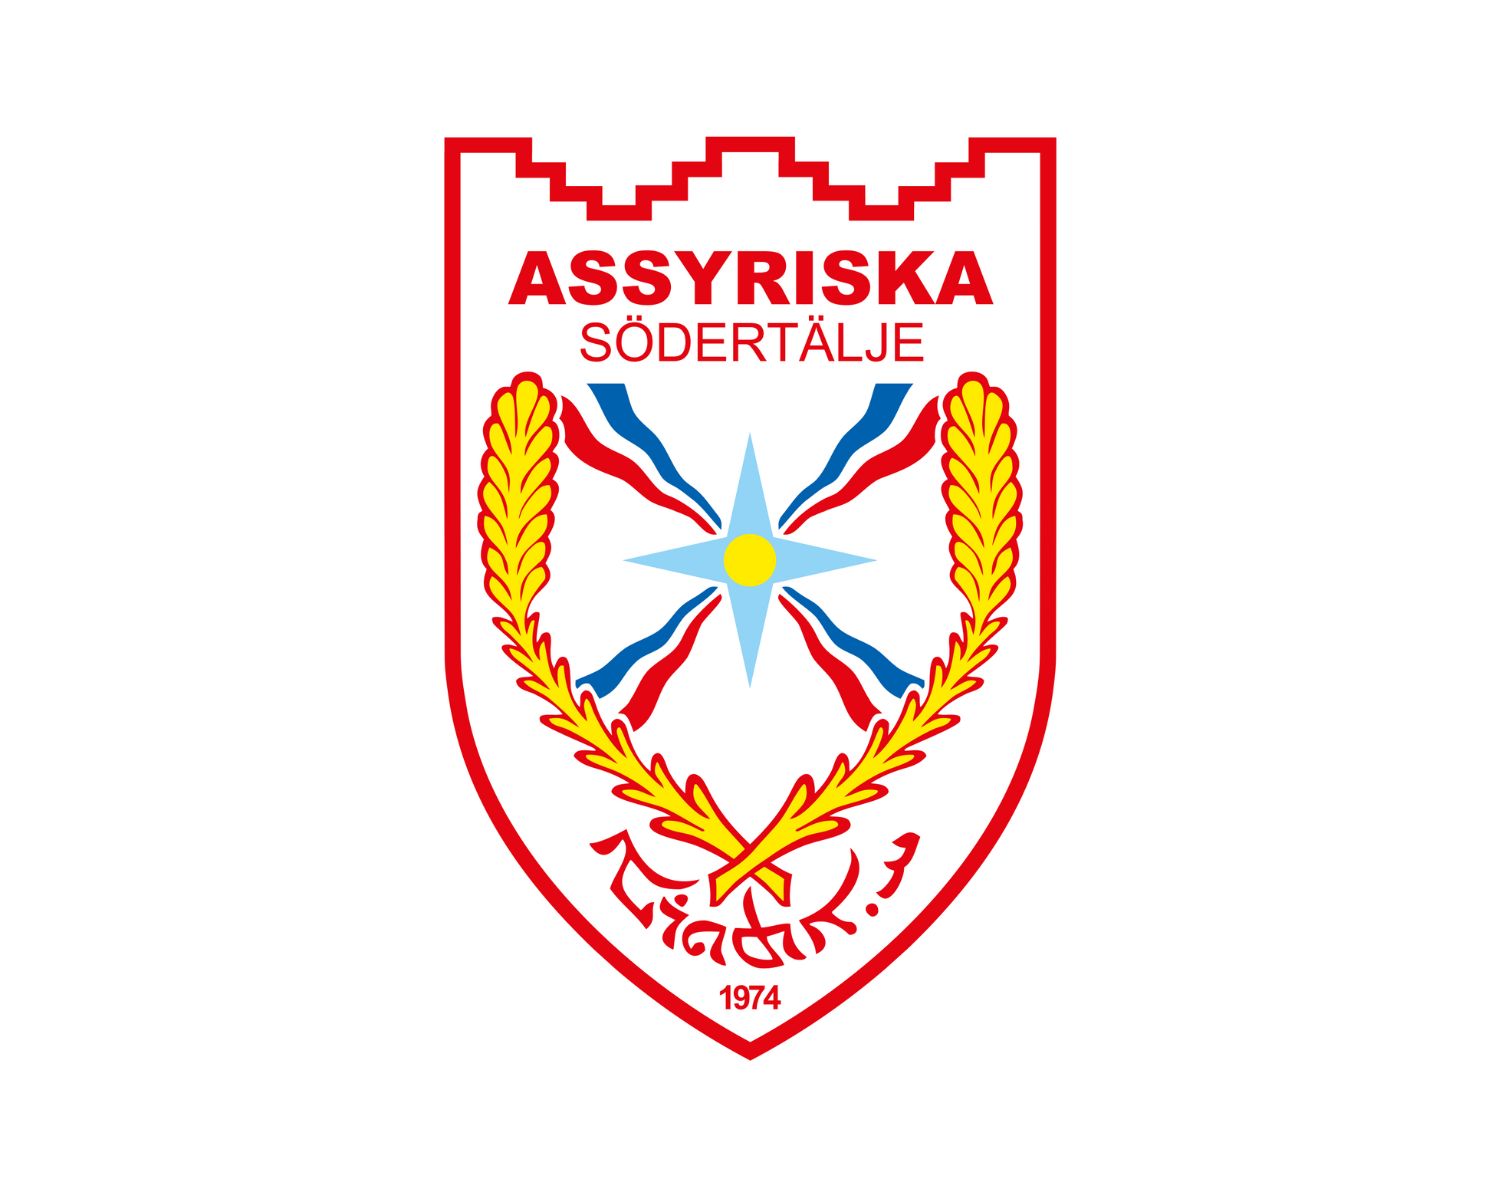 assyriska-ff-18-football-club-facts